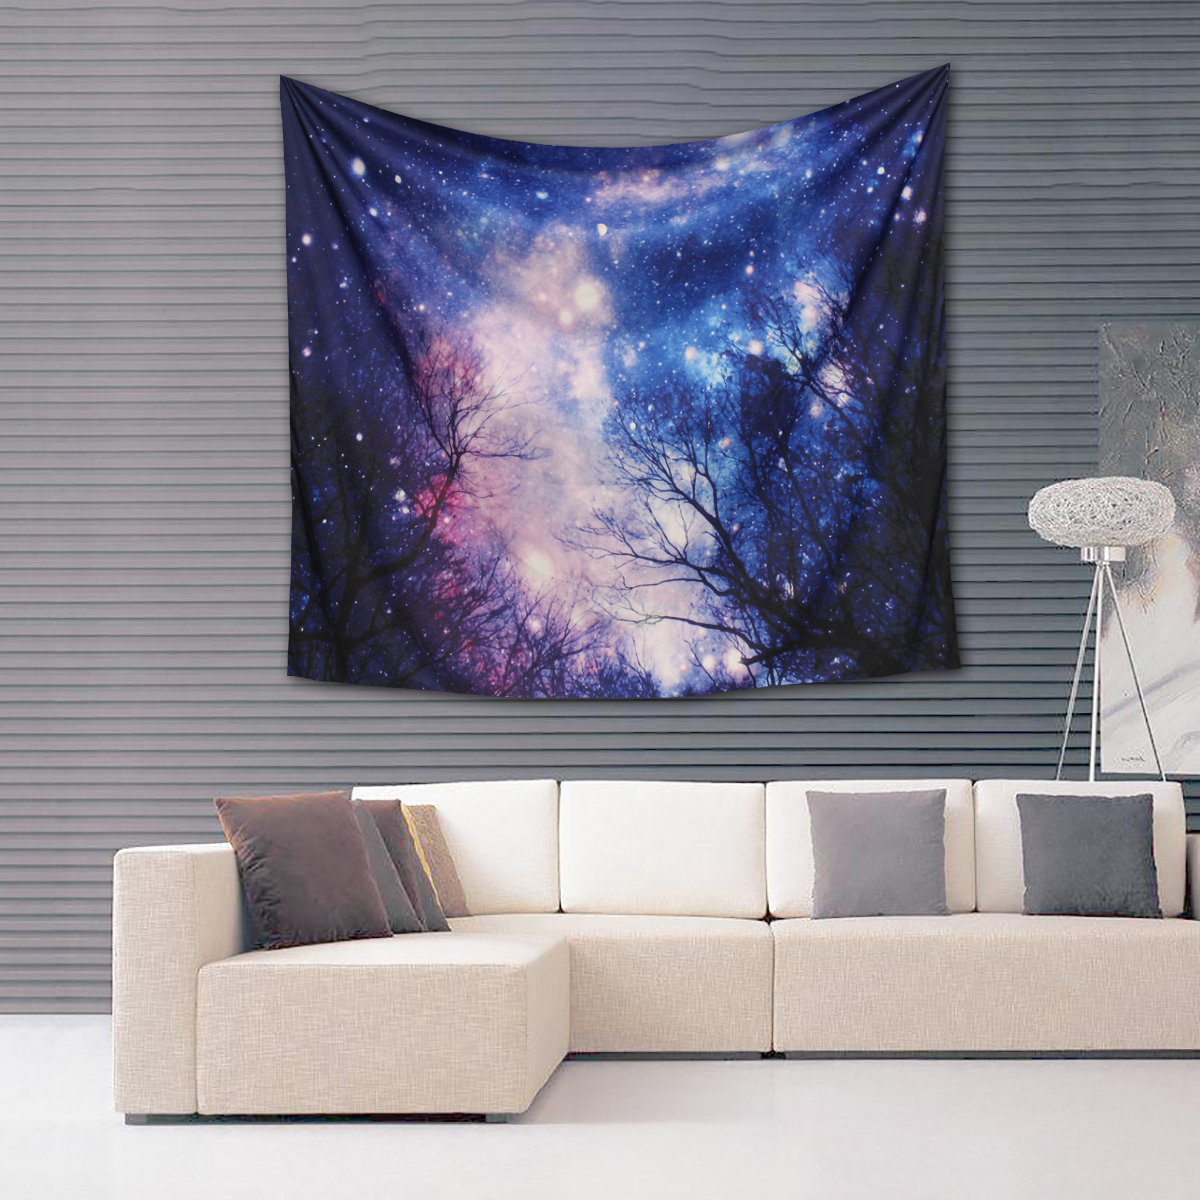 

Galaxy Forest Mandala Tapestry Wall Hanging Throw Dorm Bedspread Yoga Mat Decor